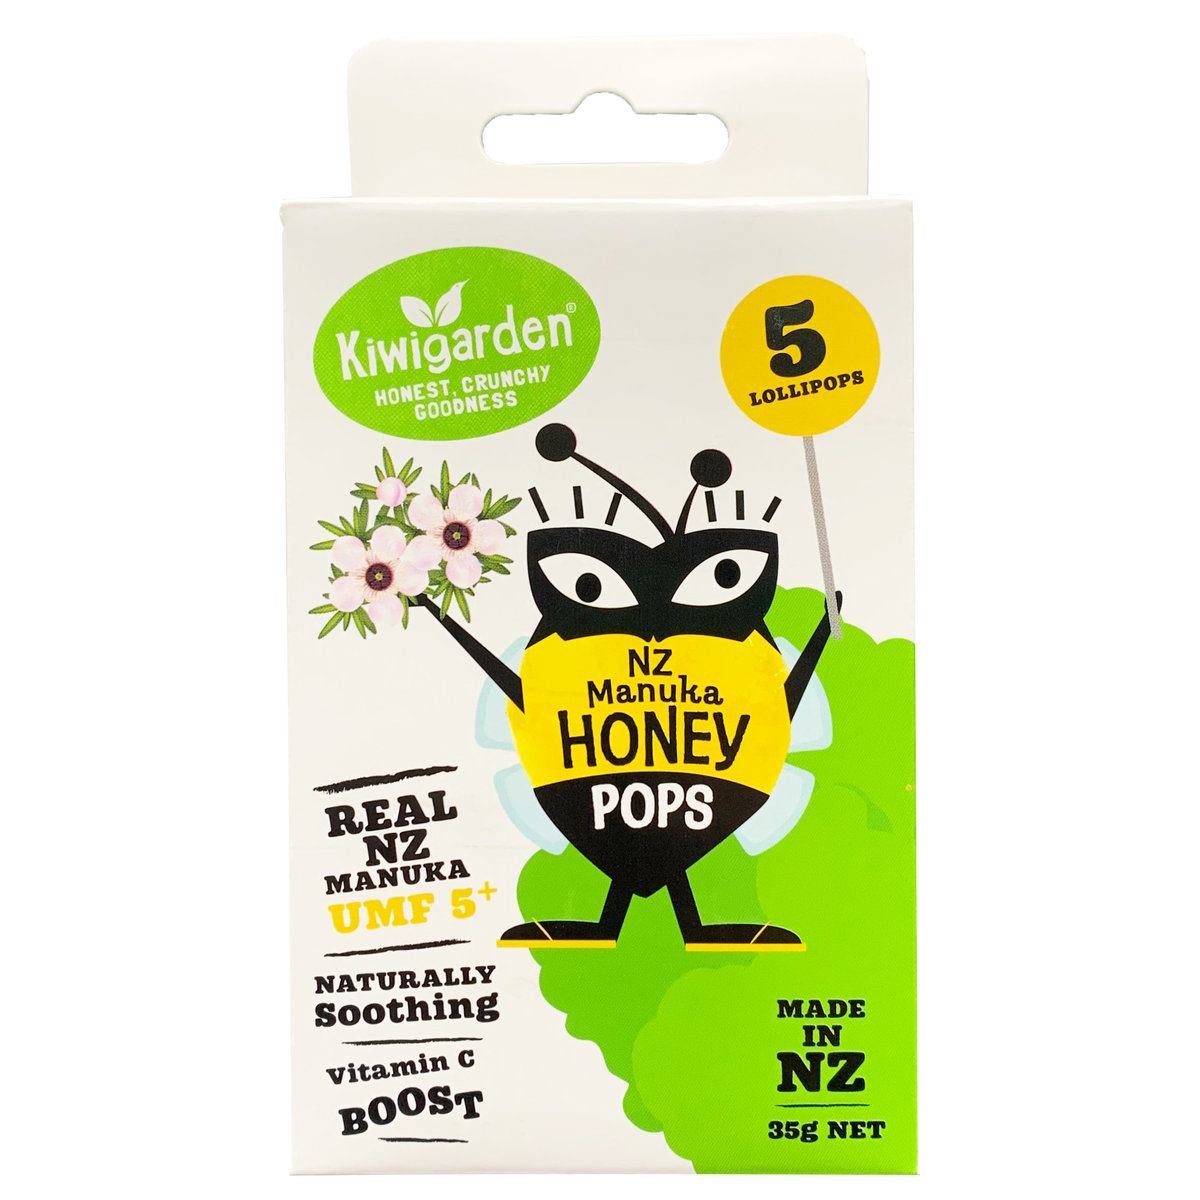 NZ Manuka UMF 5+ Honey Pops